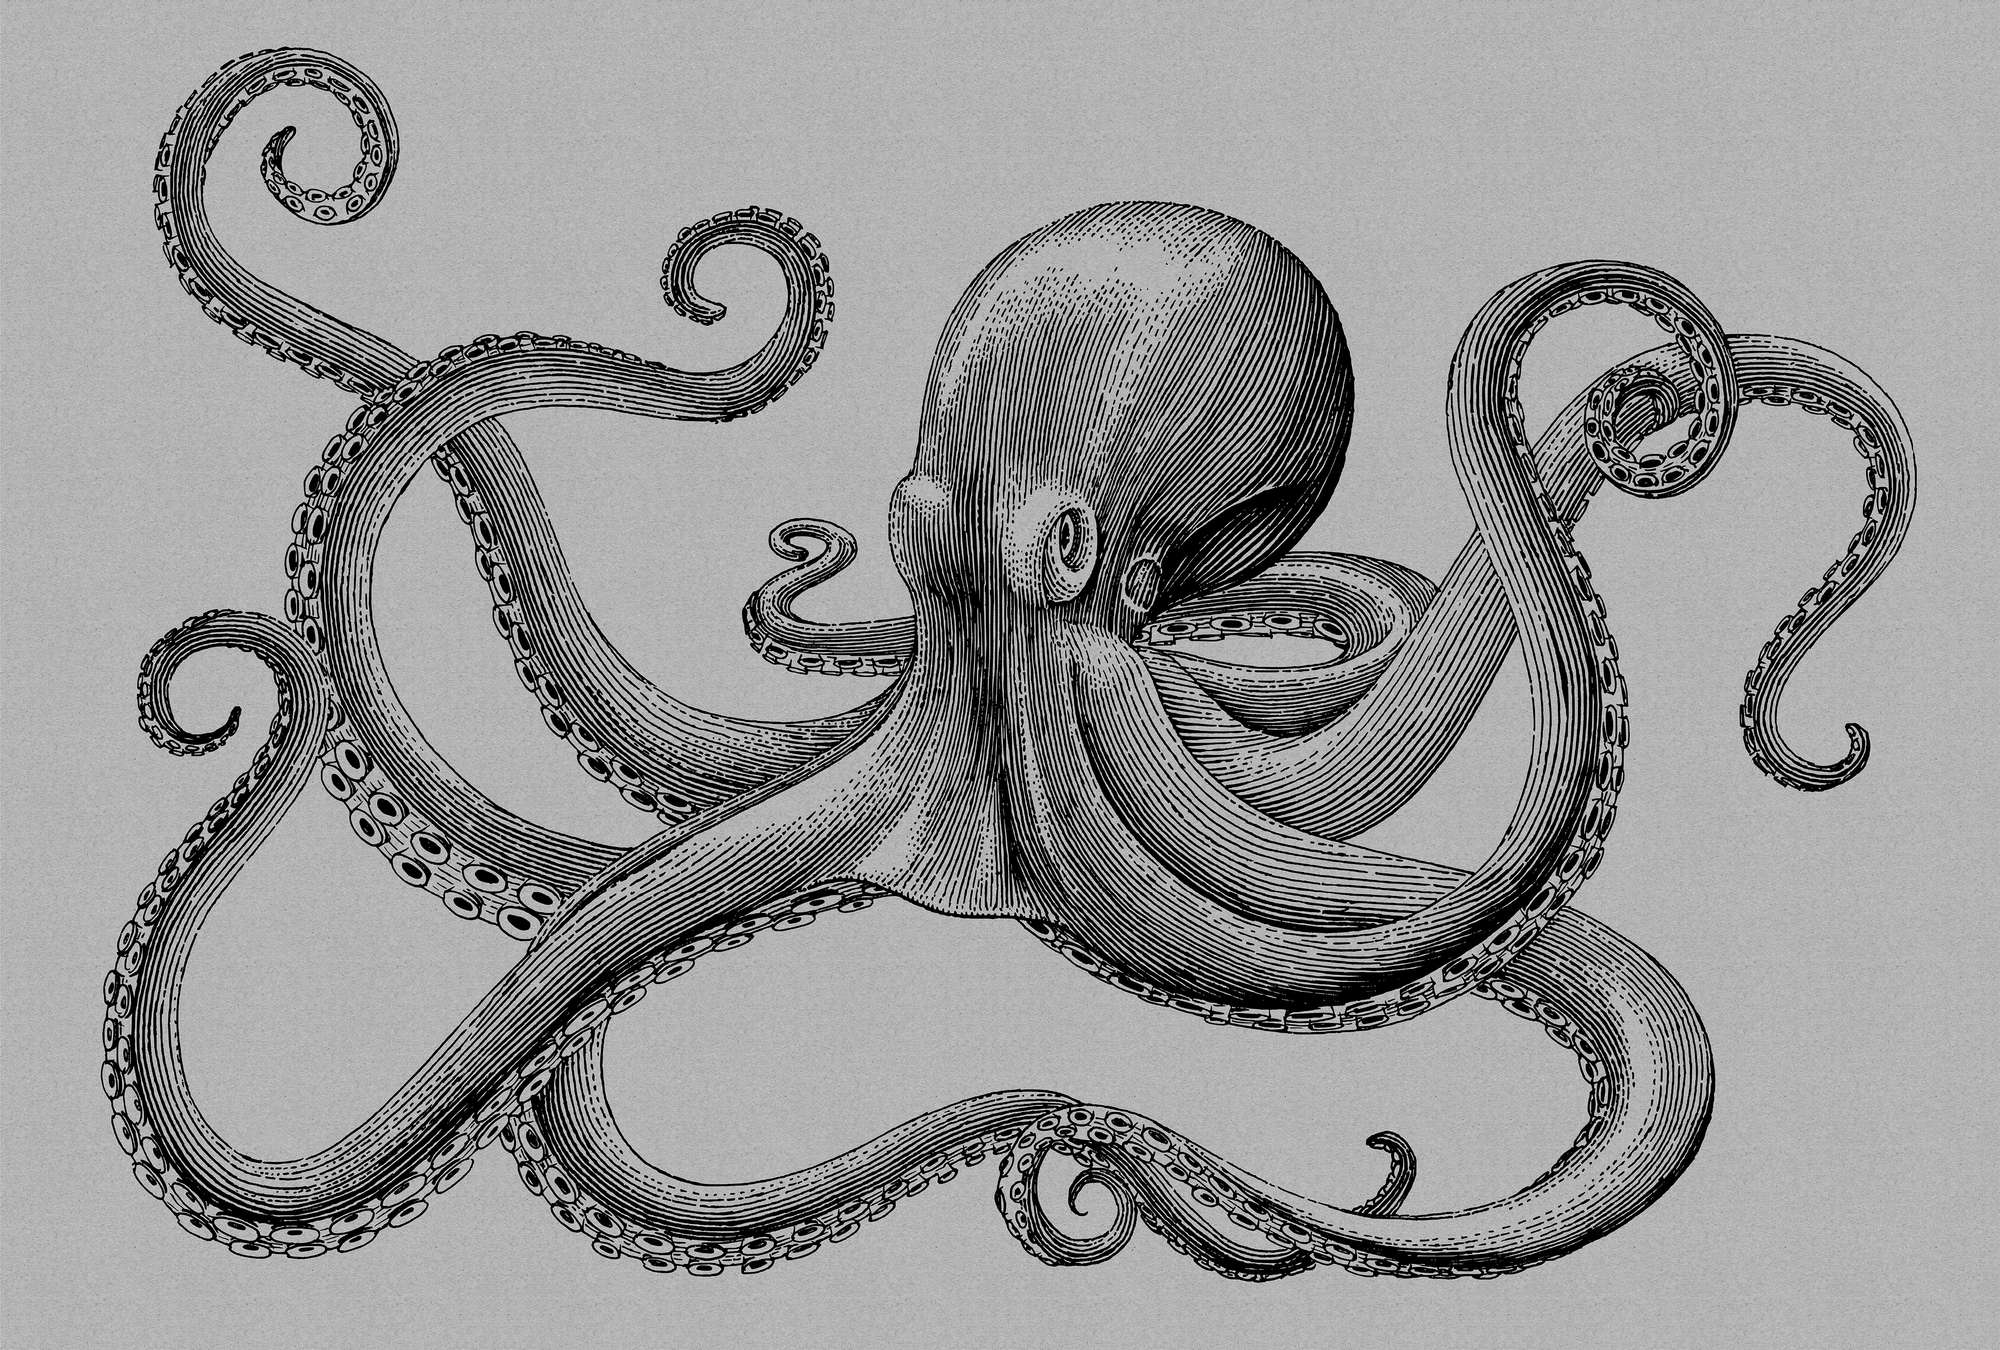             Jules 2 - Modern Octopus Cardboard Structure Character Style Wallpaper - Grey, Black | Matt Smooth Non-woven
        